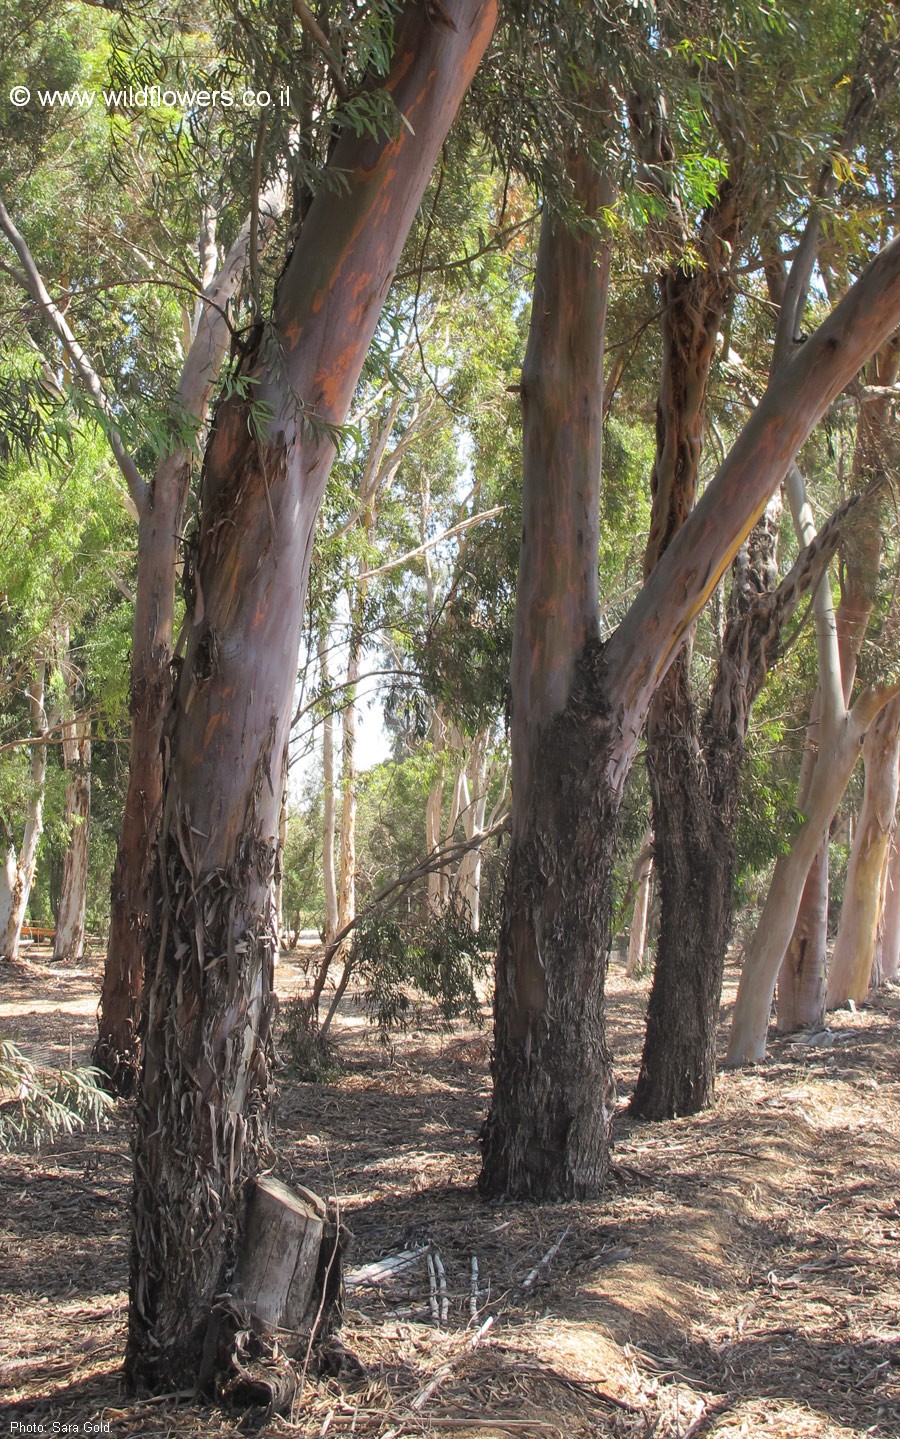 Eucalyptus sargentii